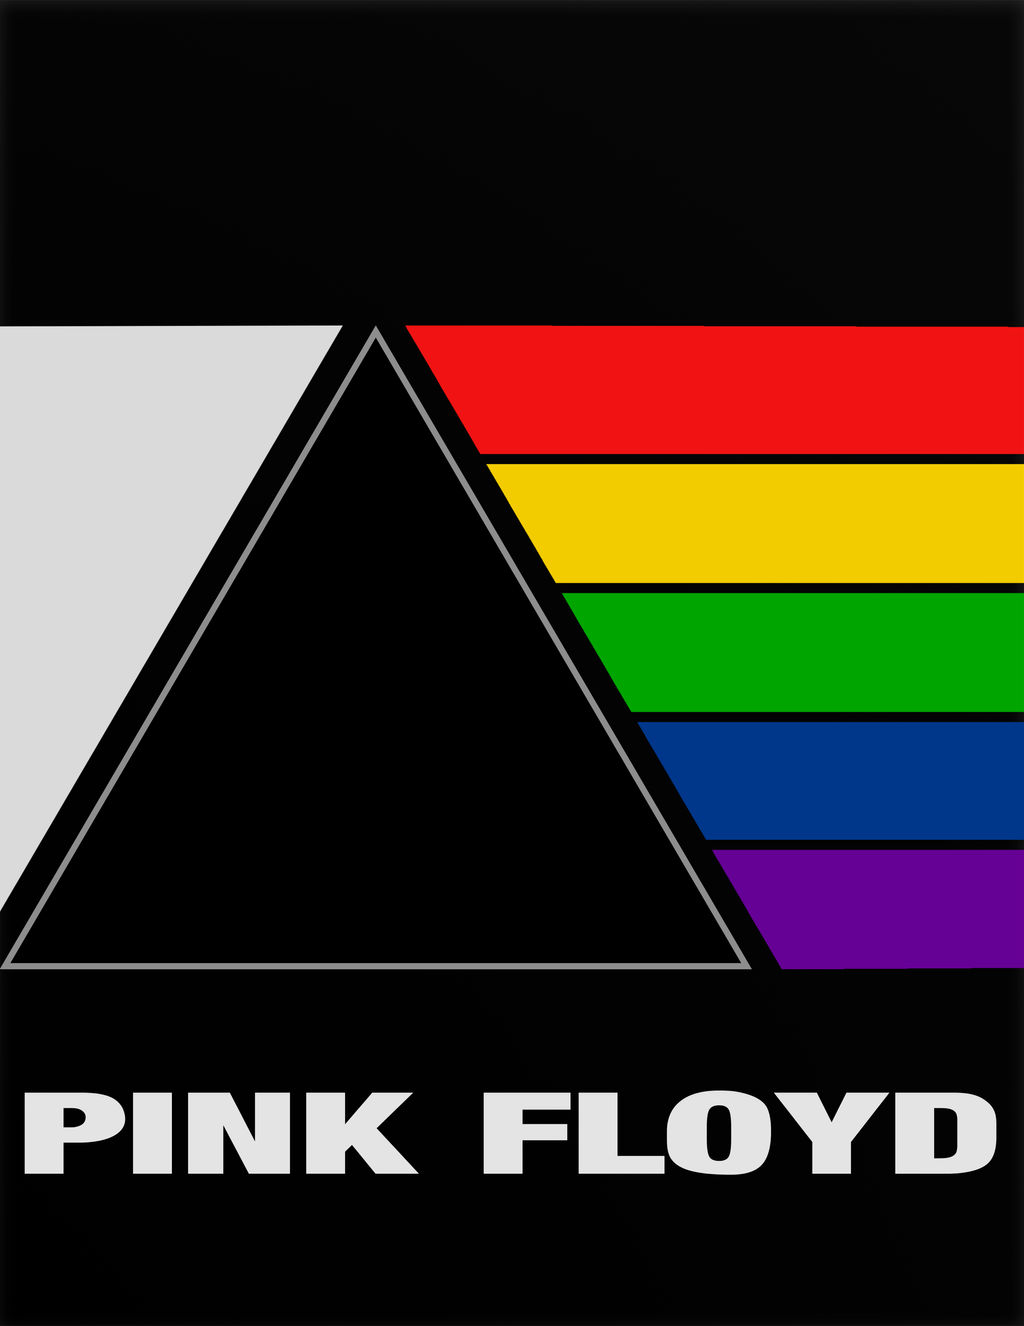 Pink Floyd (Poster) by NocteDesign on DeviantArt